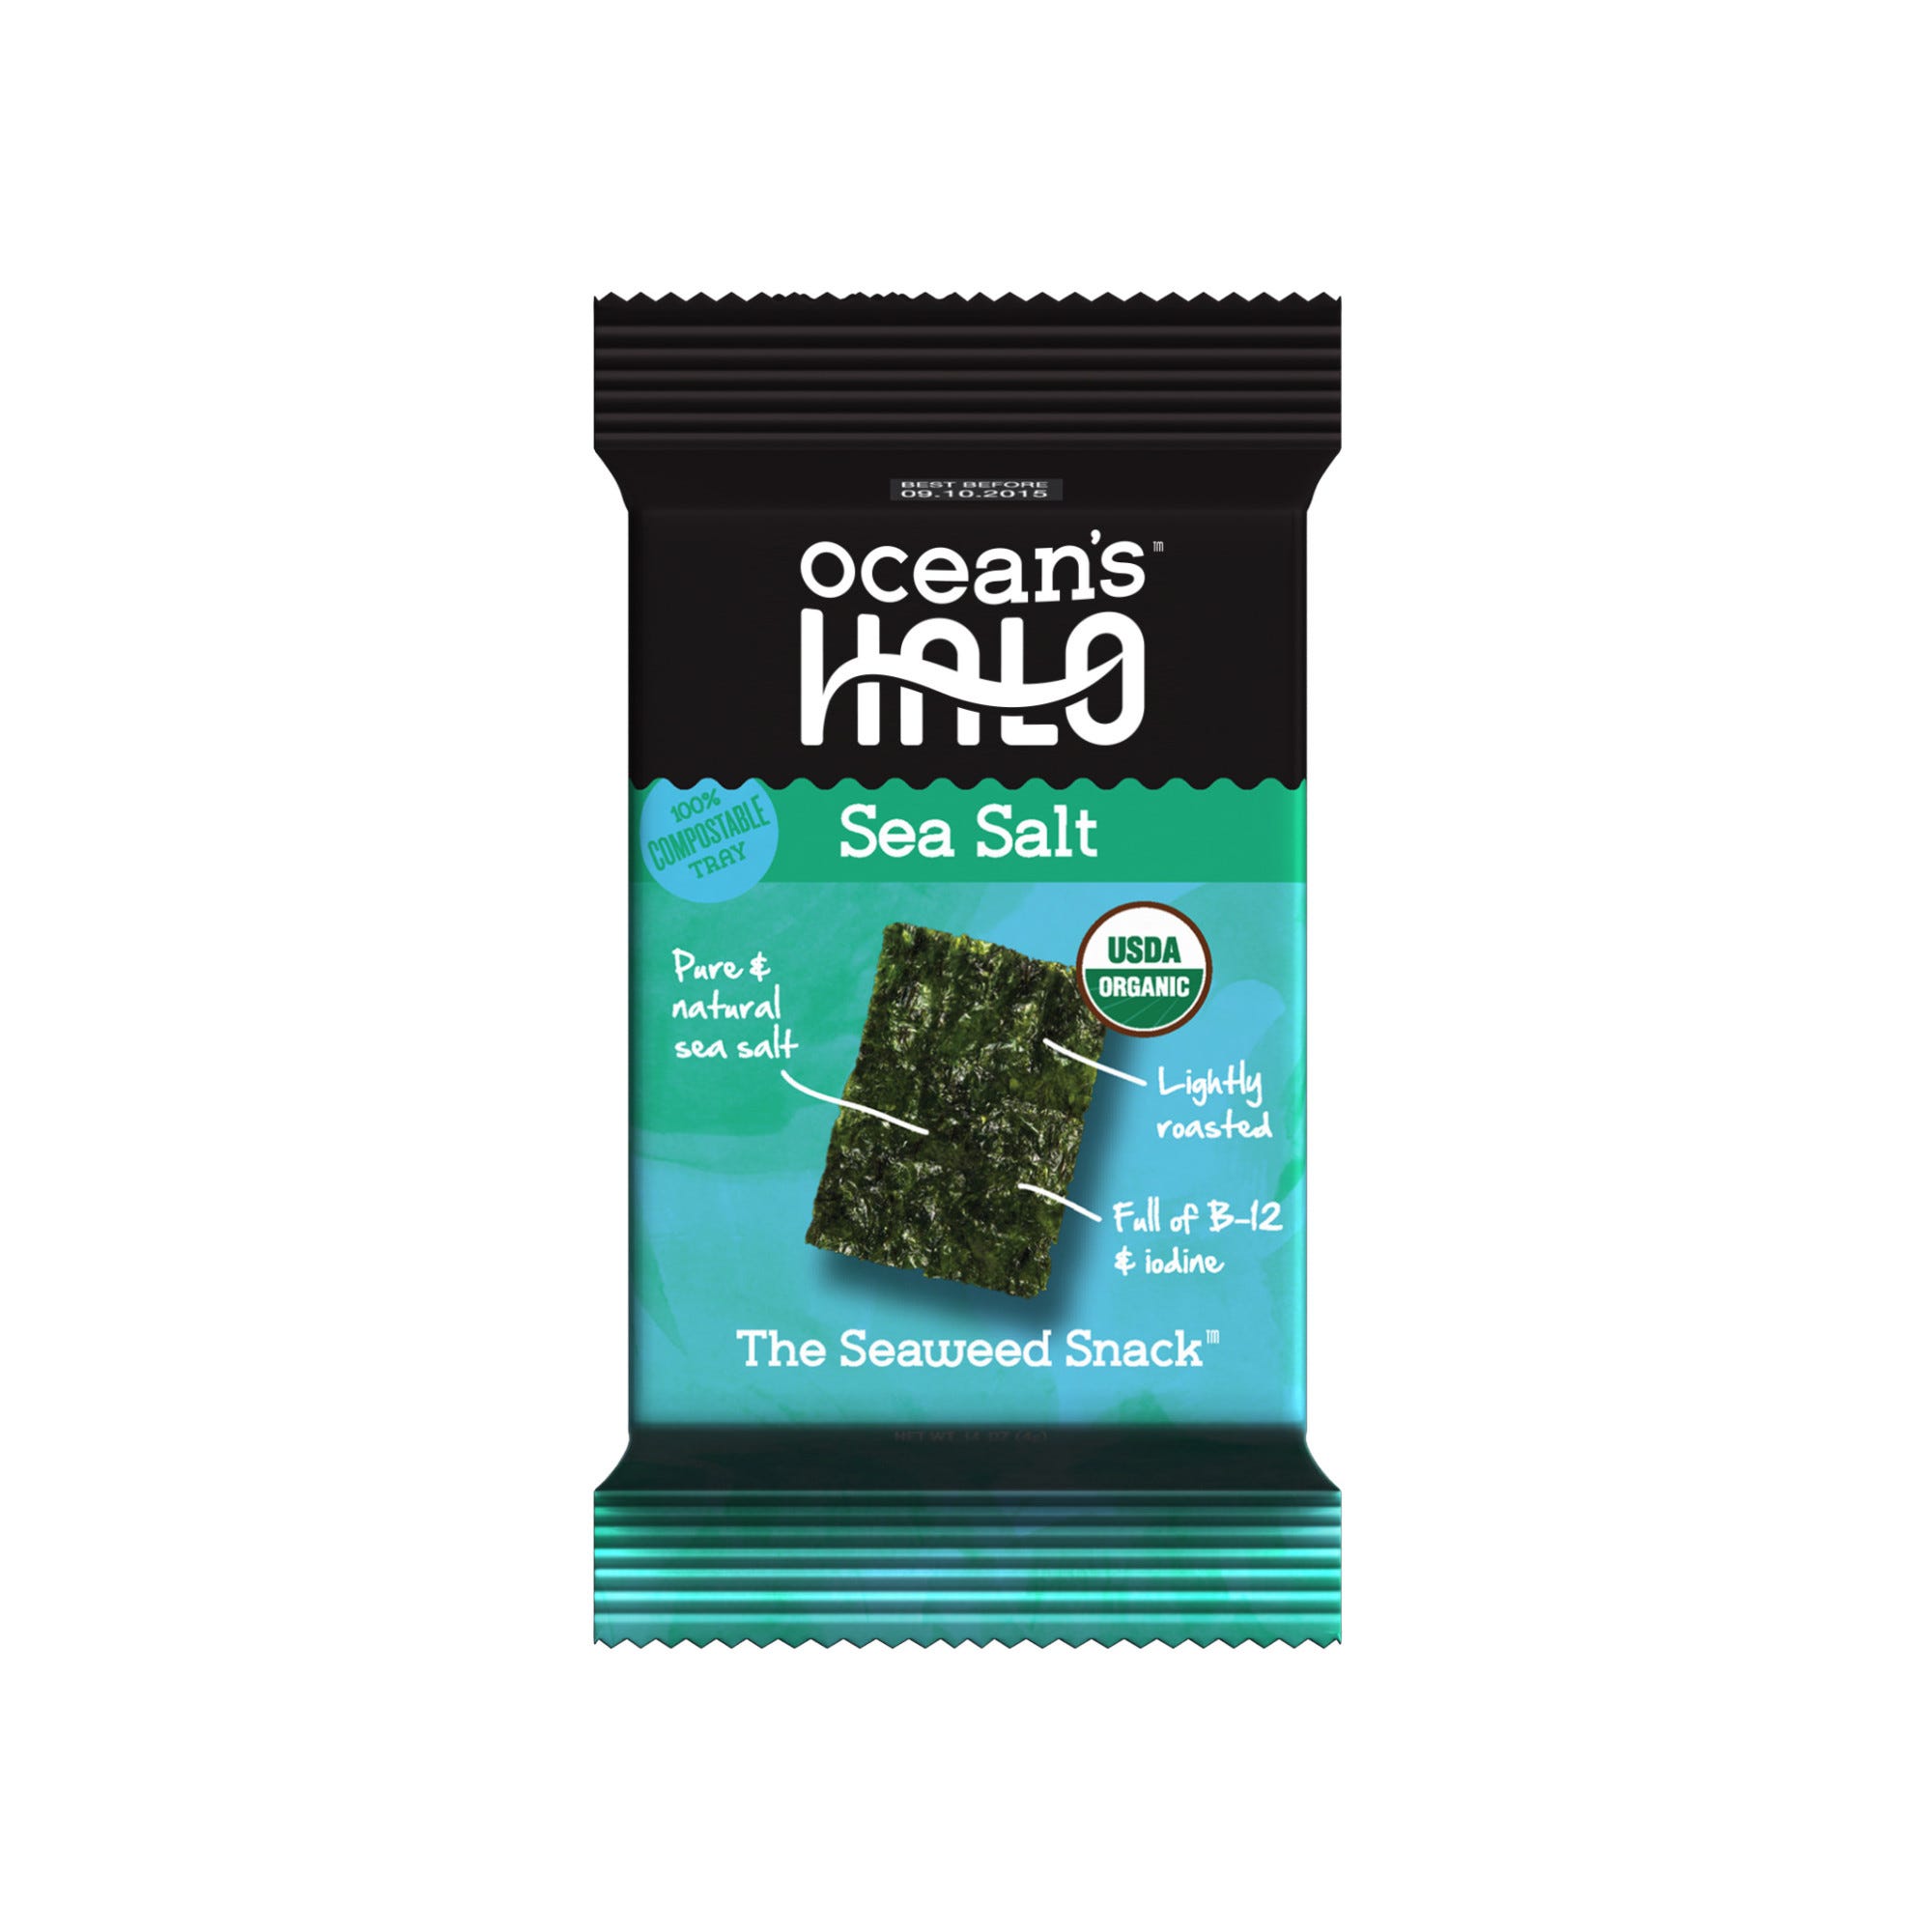 Ocean's Halo Sea Salt Seaweed Snack - 0.14 oz